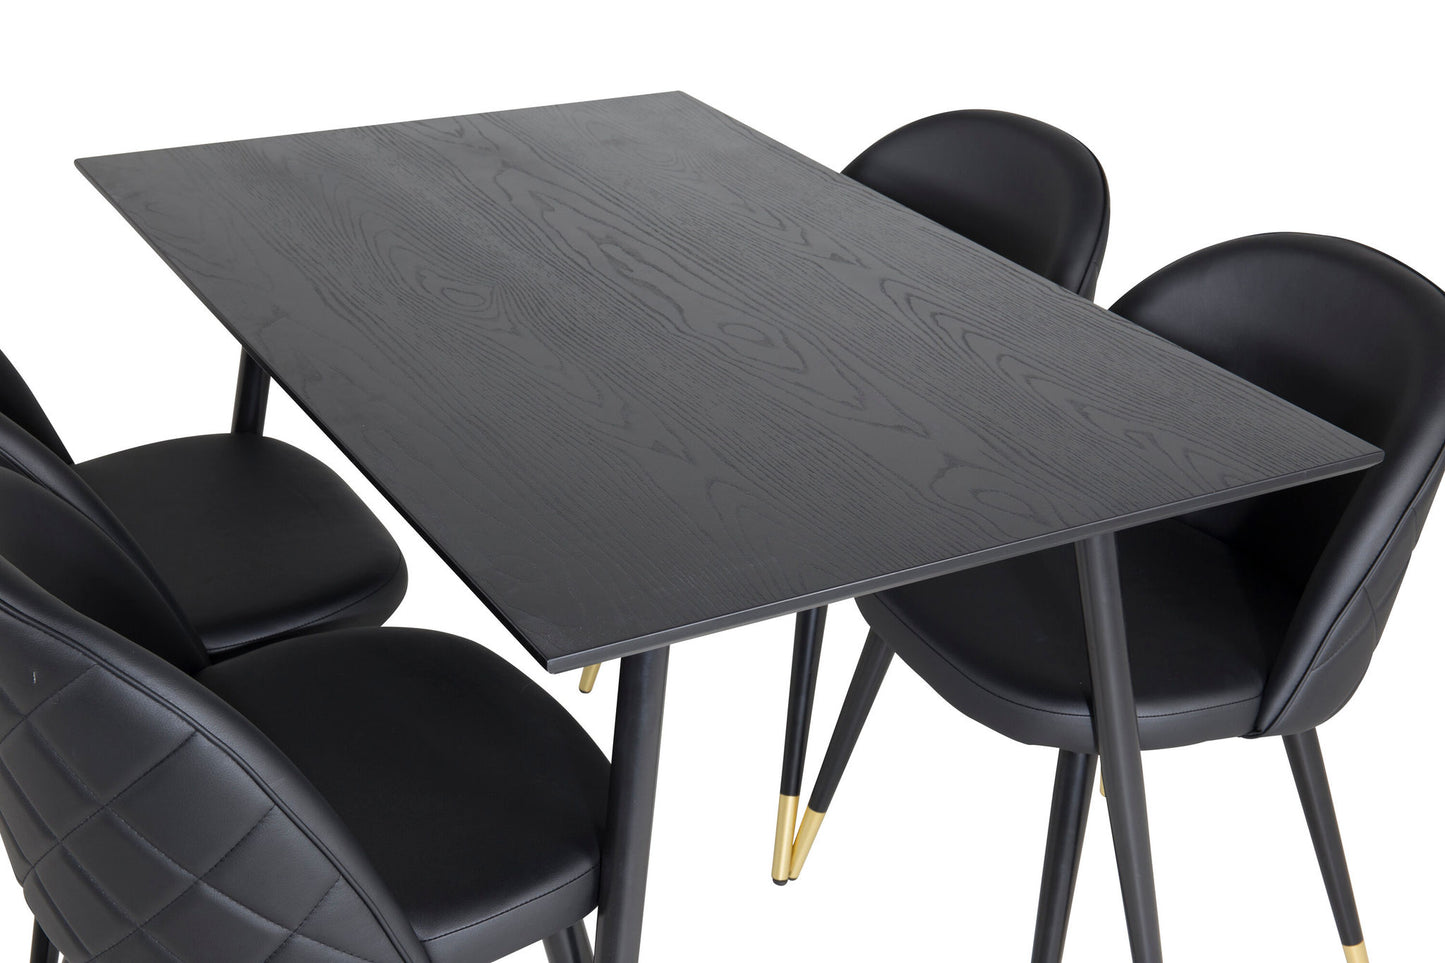 Dipp - Spisebord, 120 cm - Sort finér - Sorte ben m. Messing dipp+ velour Spisebordsstol m. syninger - PU - Sort